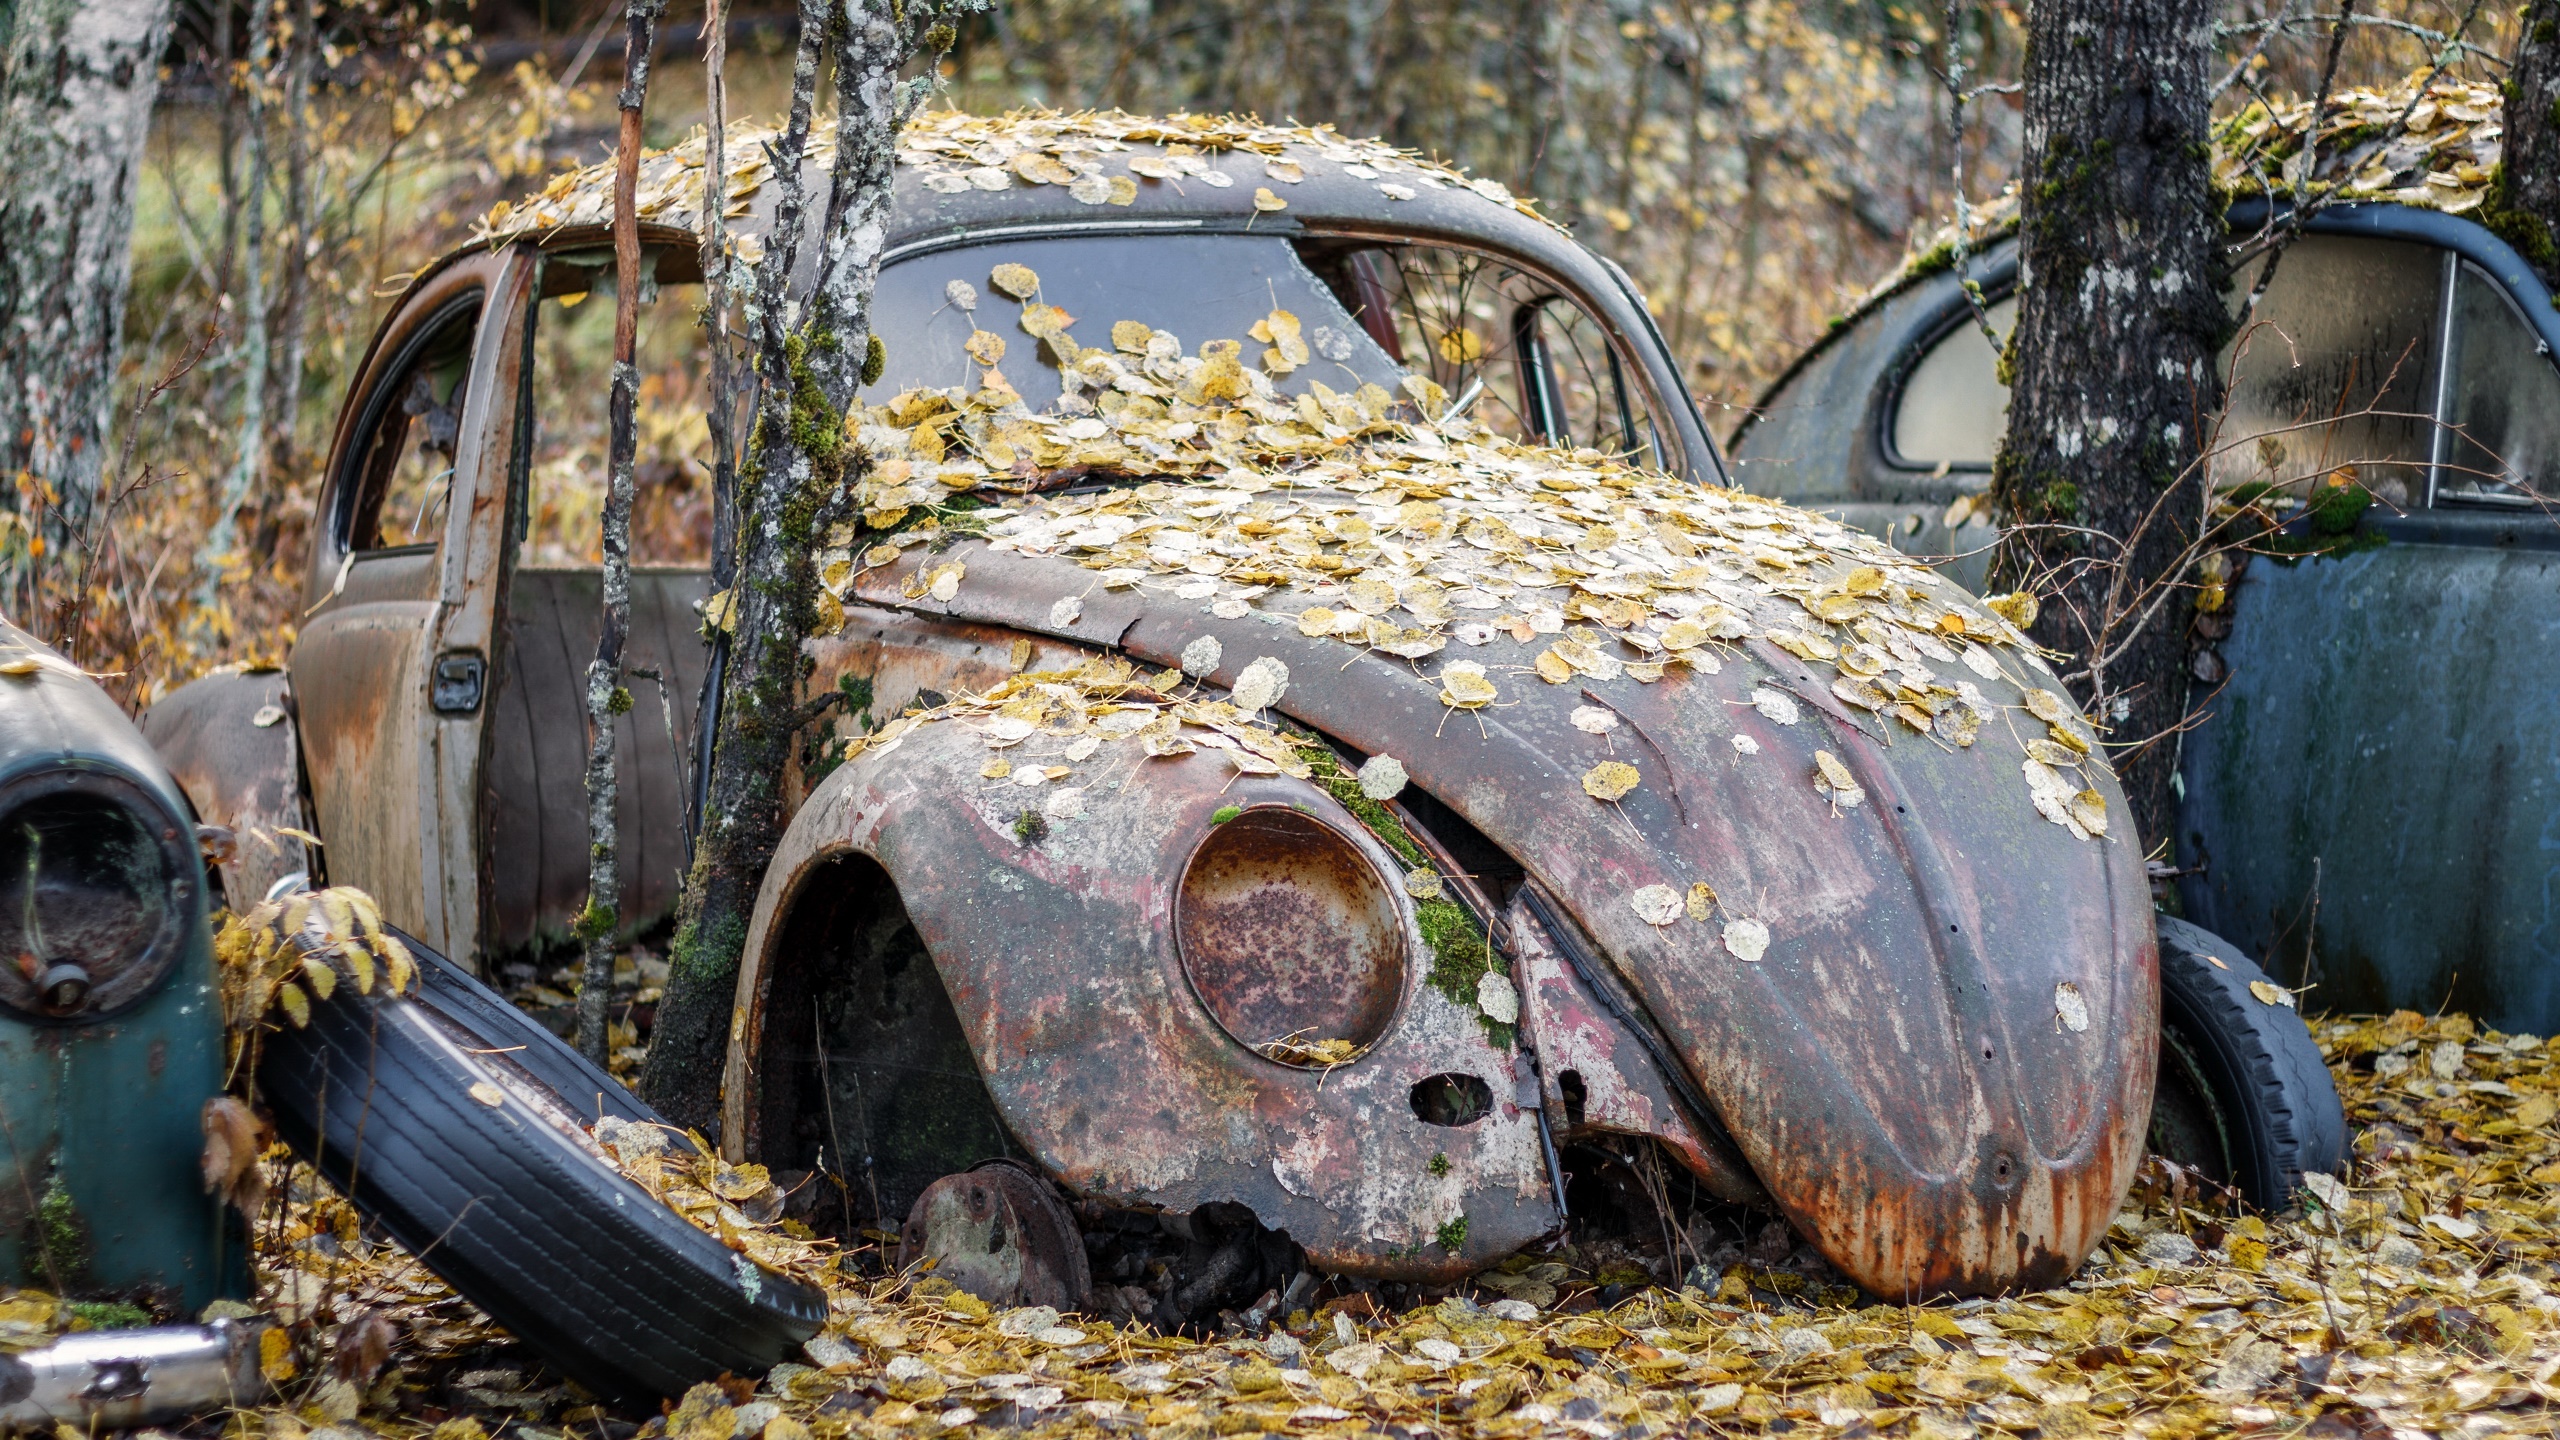 General 2560x1440 car Volkswagen rust old leaves outdoors wreck vehicle